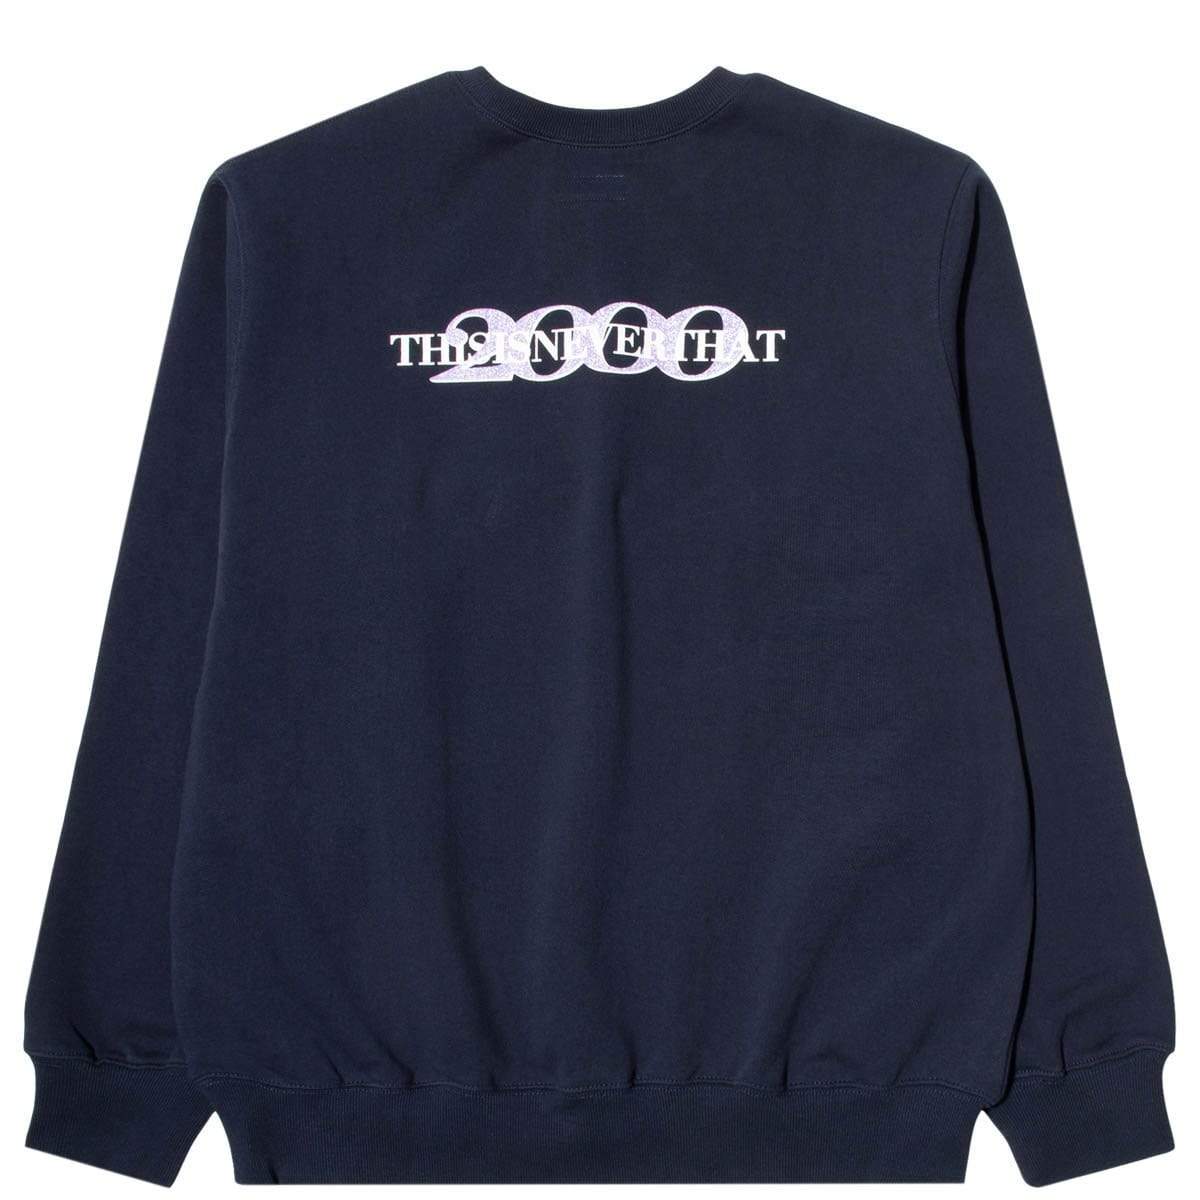 thisisneverthat Hoodies & Sweatshirts YEAR 2000 CREWNECK